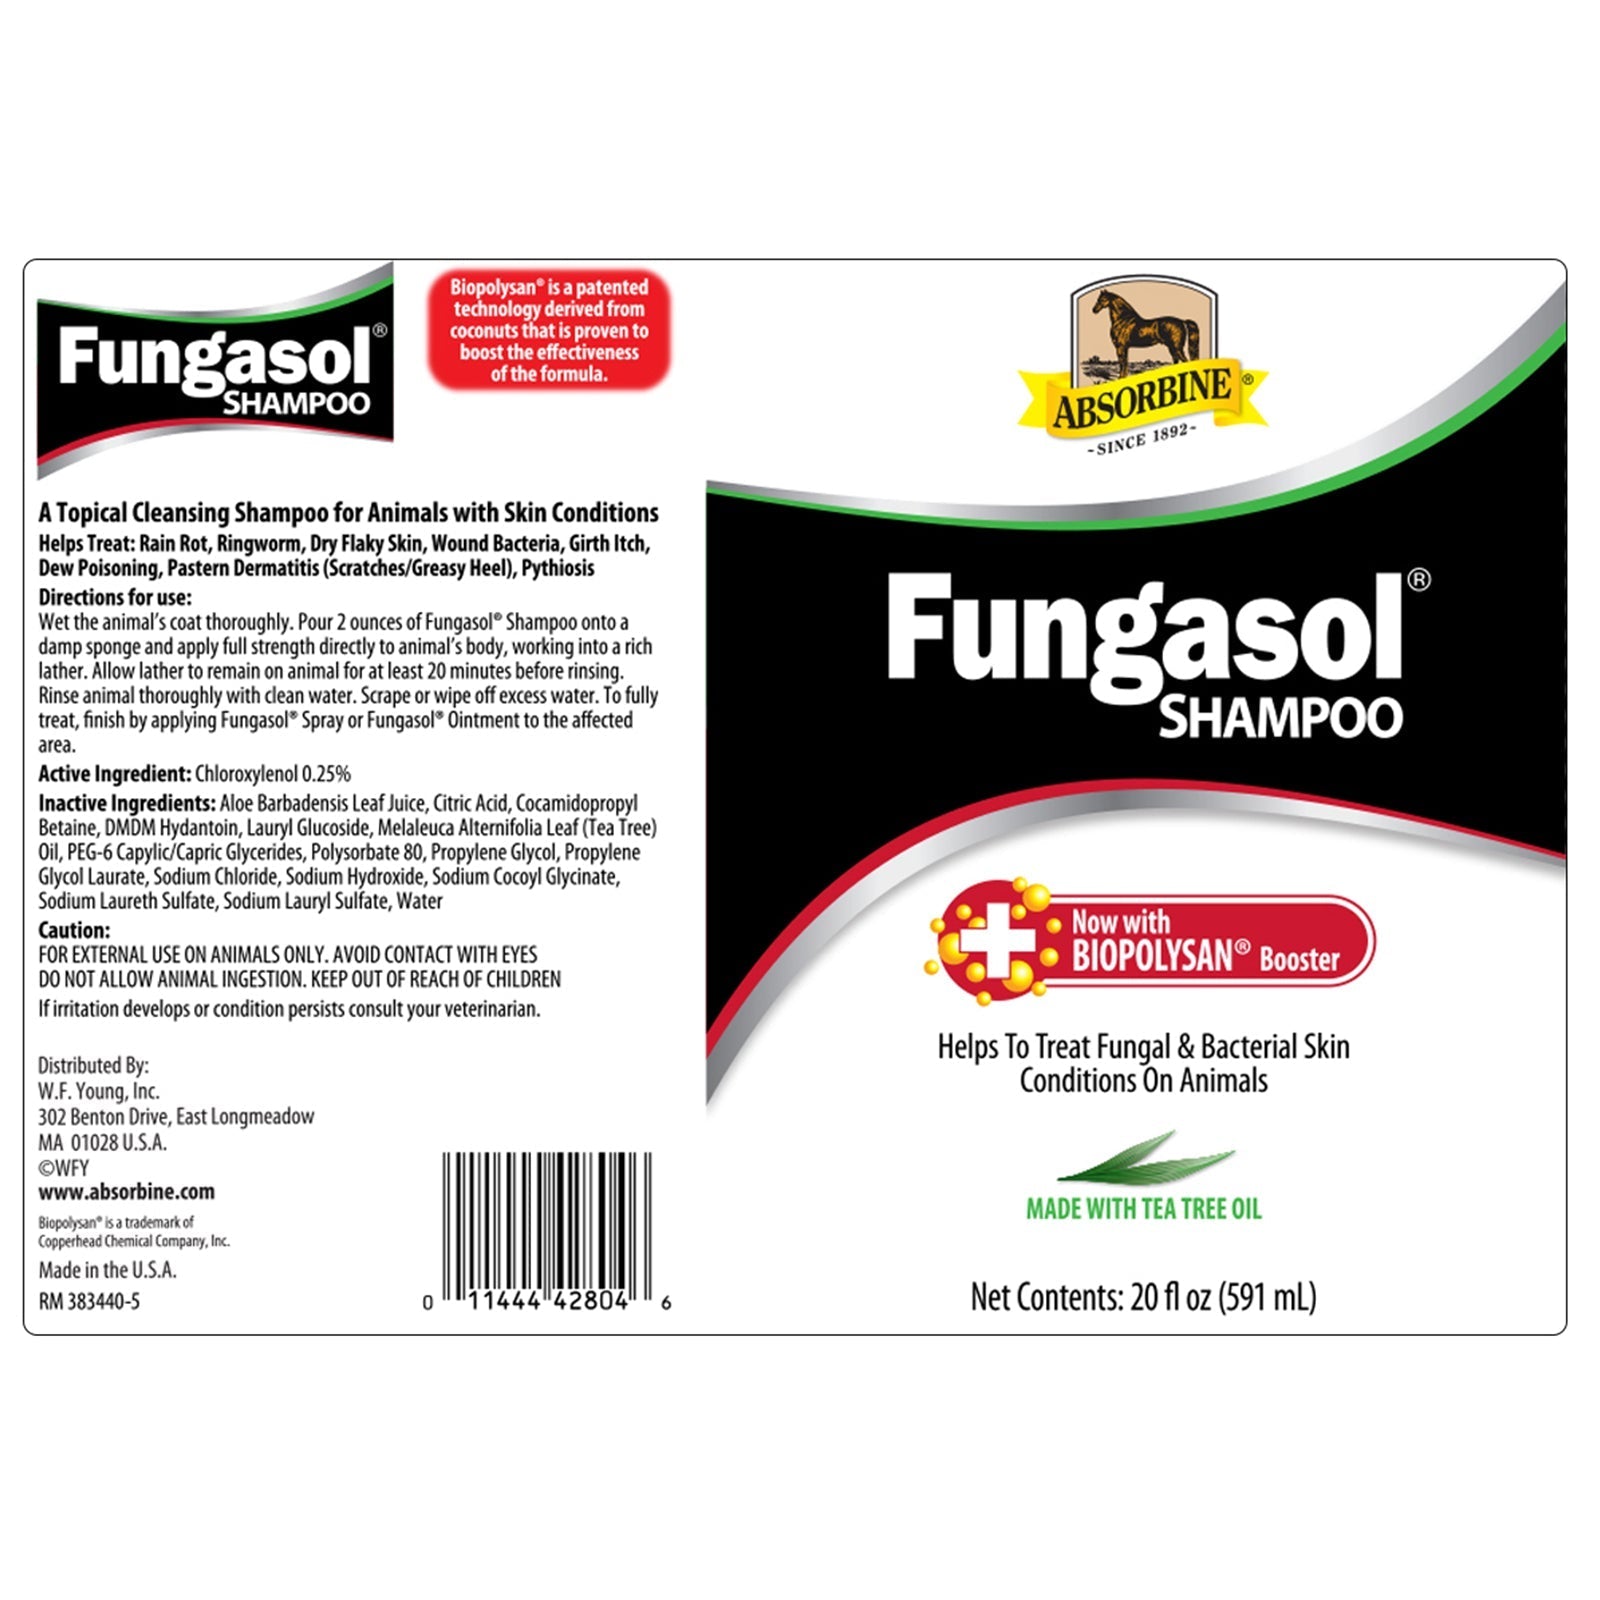 ABSORBINE, Absorbine Fungasol® Shampoo